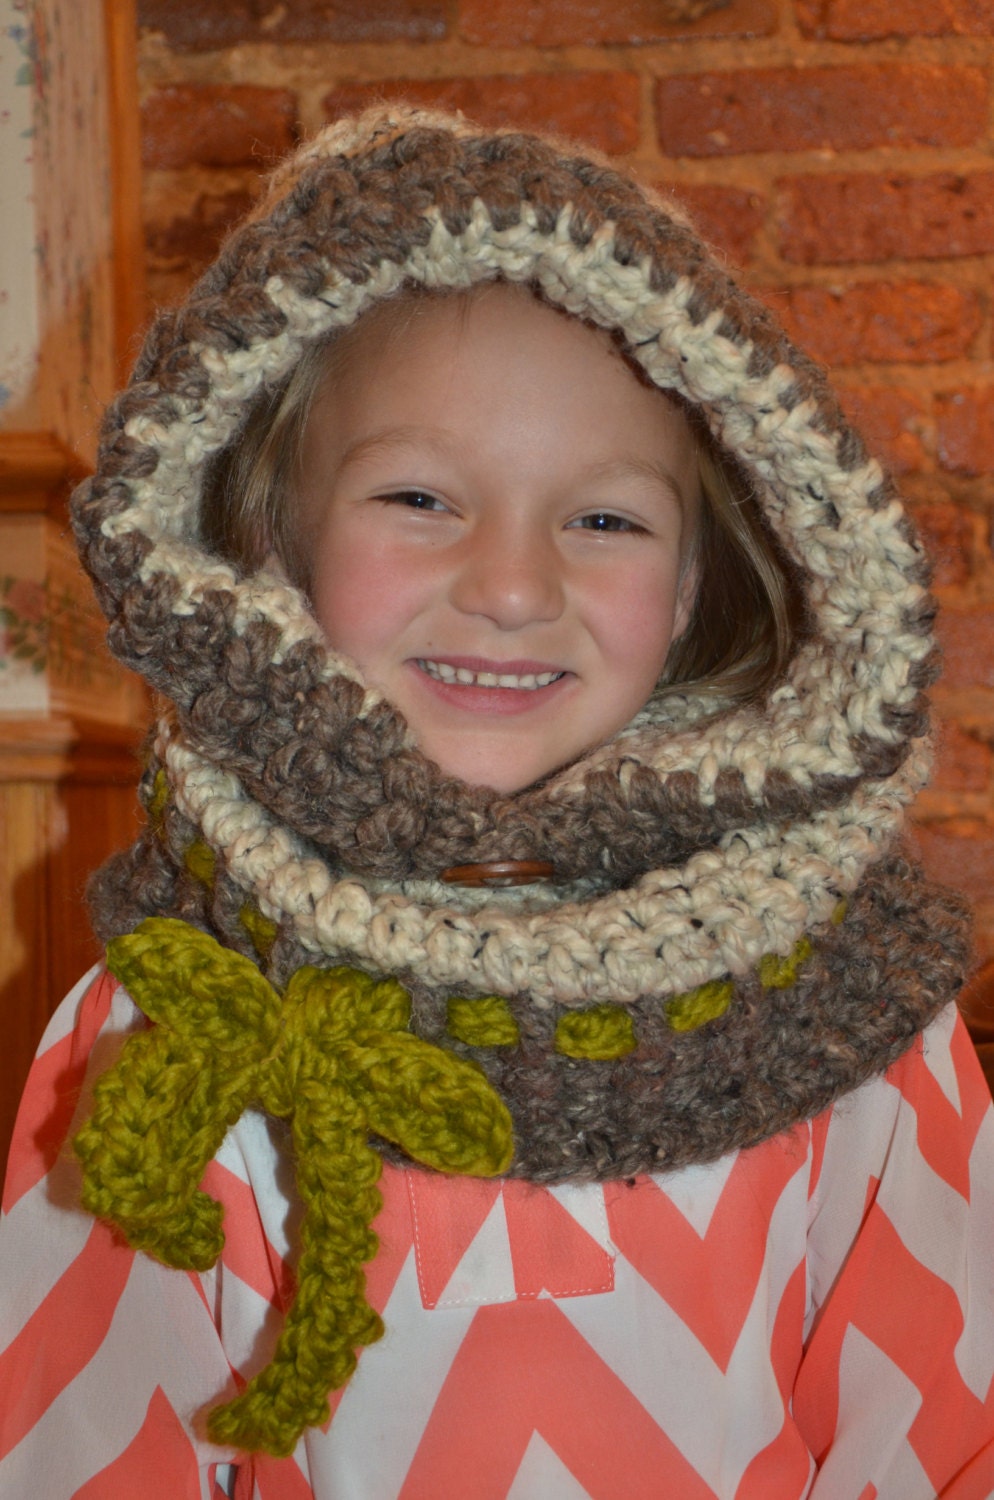 Crochet Hooded Cowl